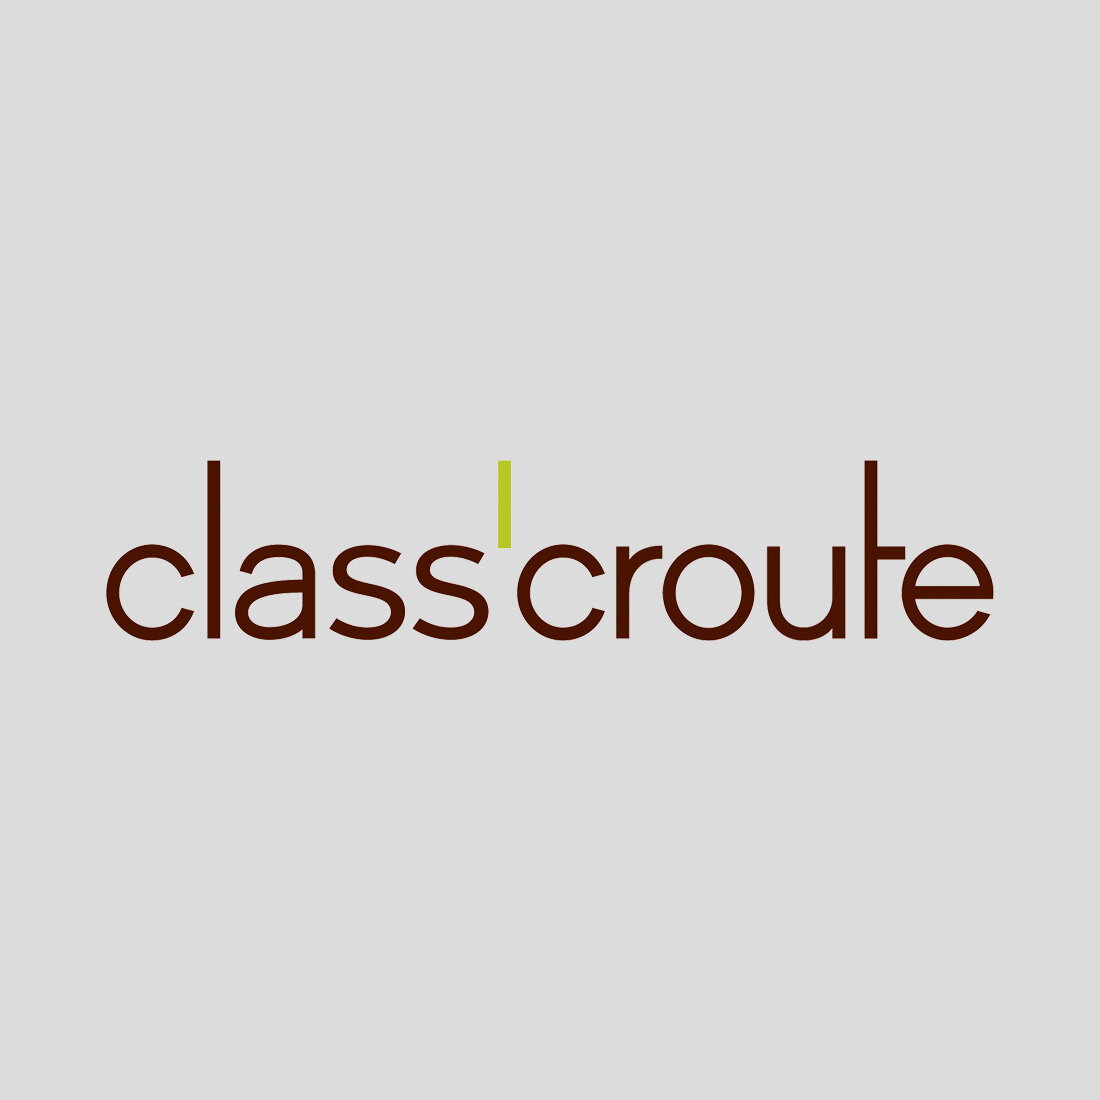 classcroute.jpg